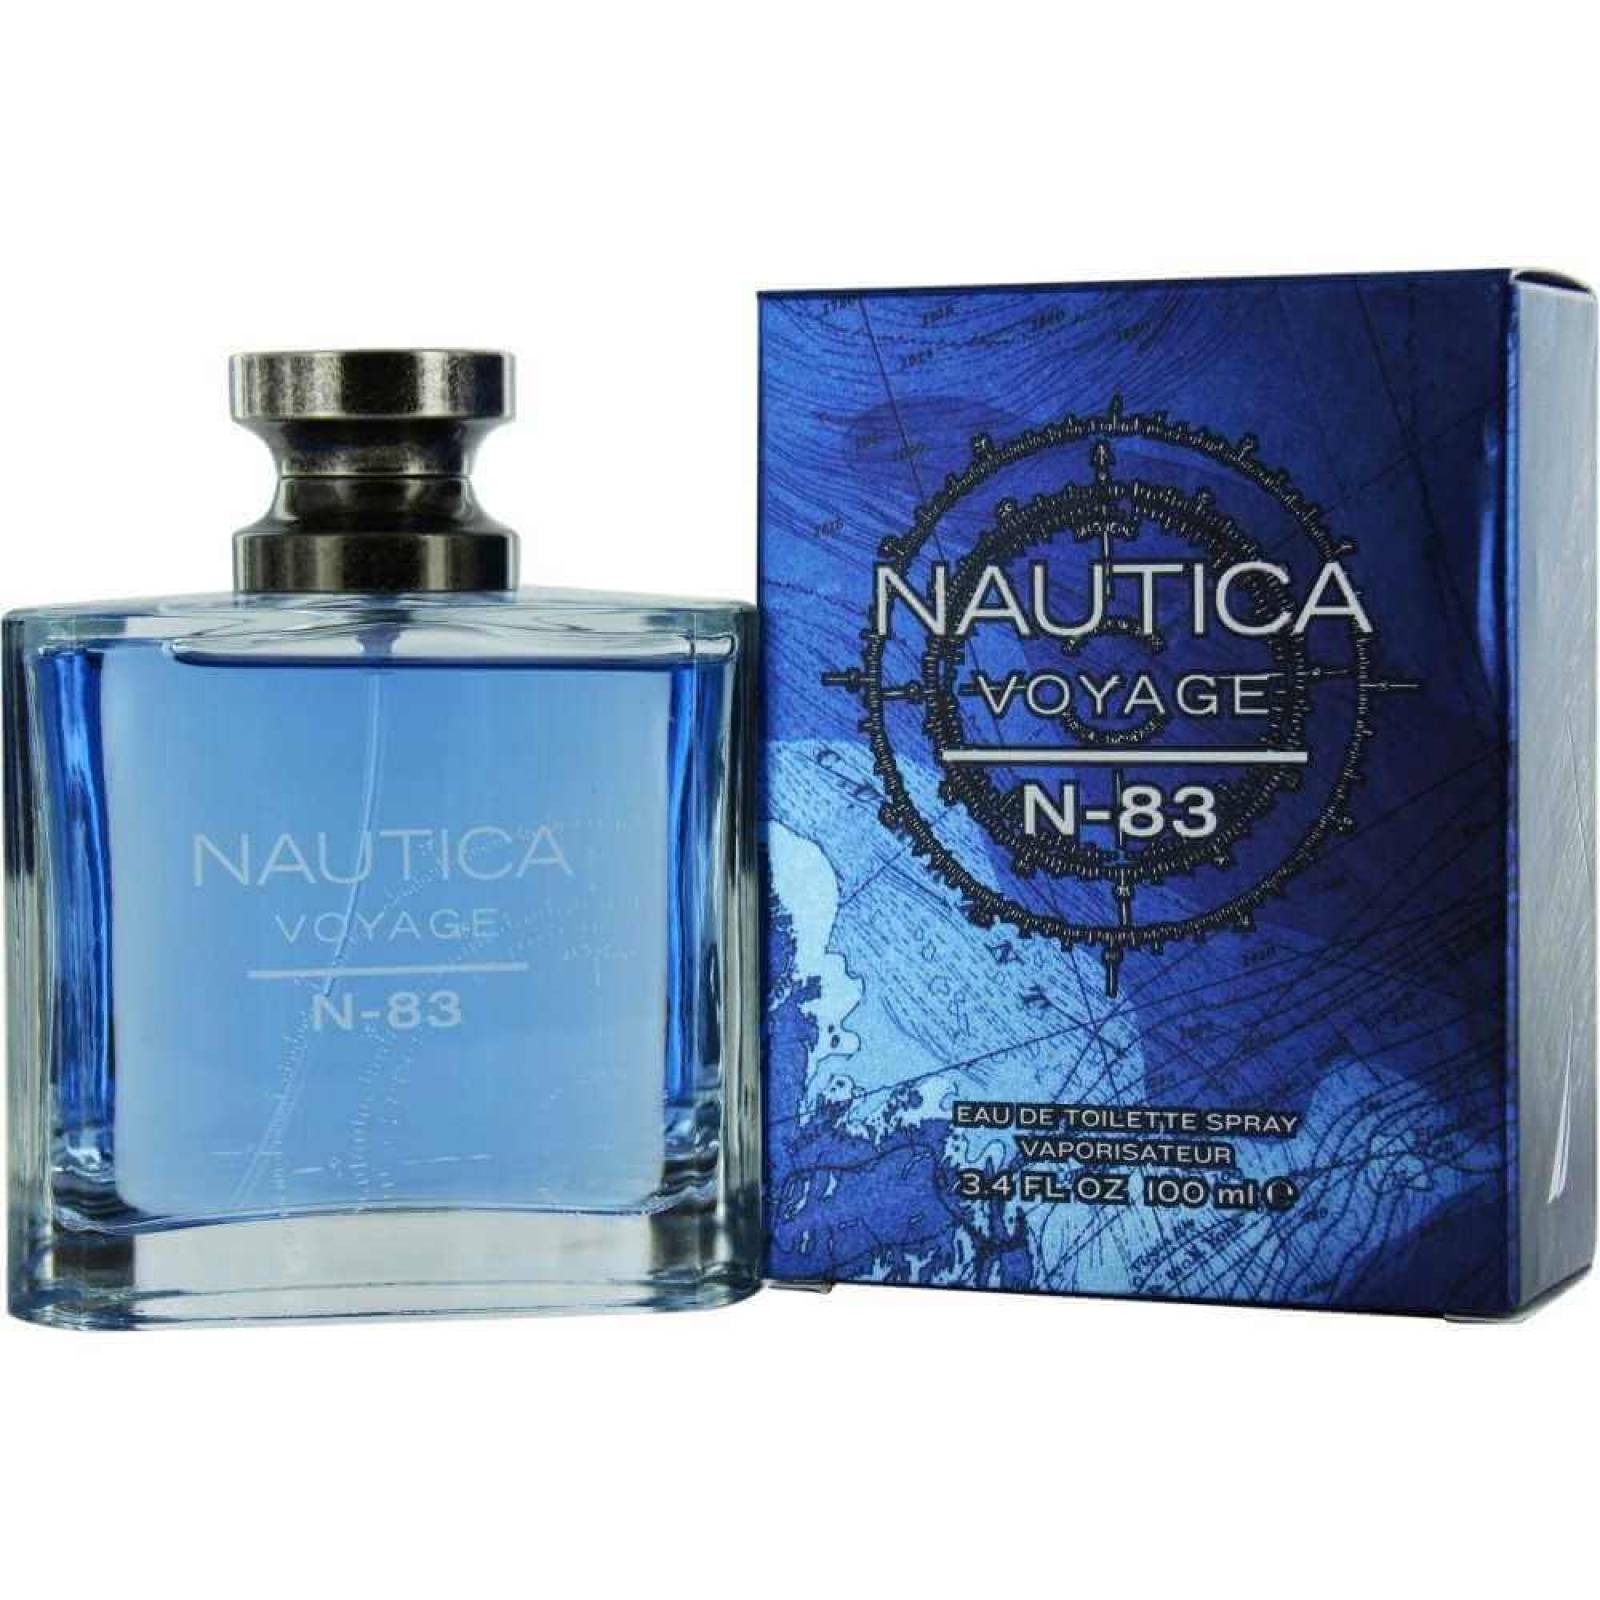 nautica voyage n 83 edt